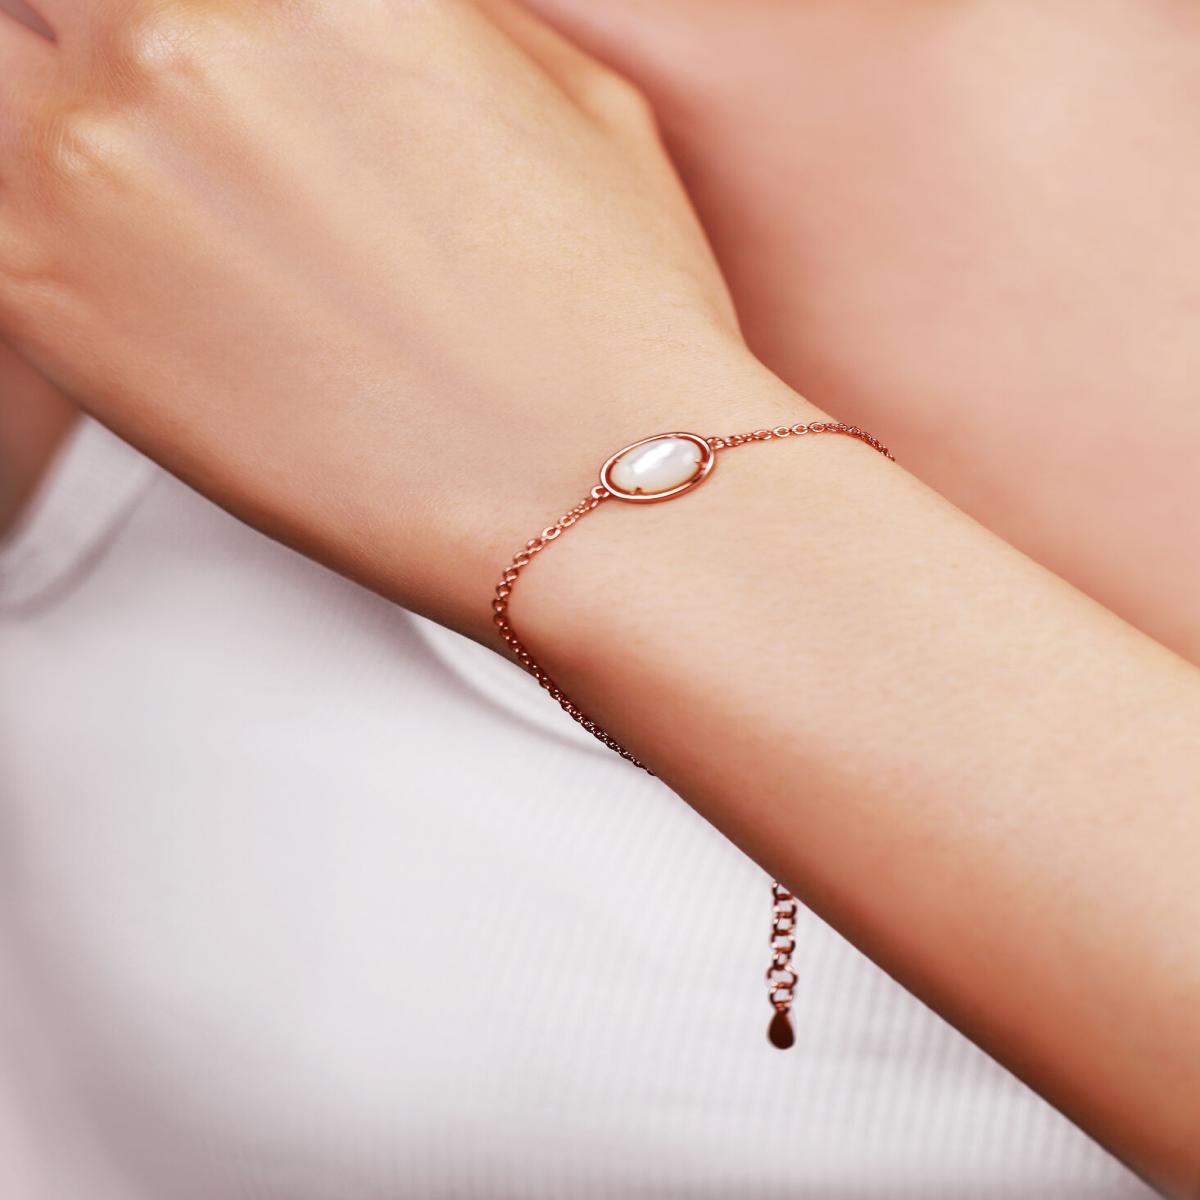 51599-bracelet-charms-pink-sterling-silver-